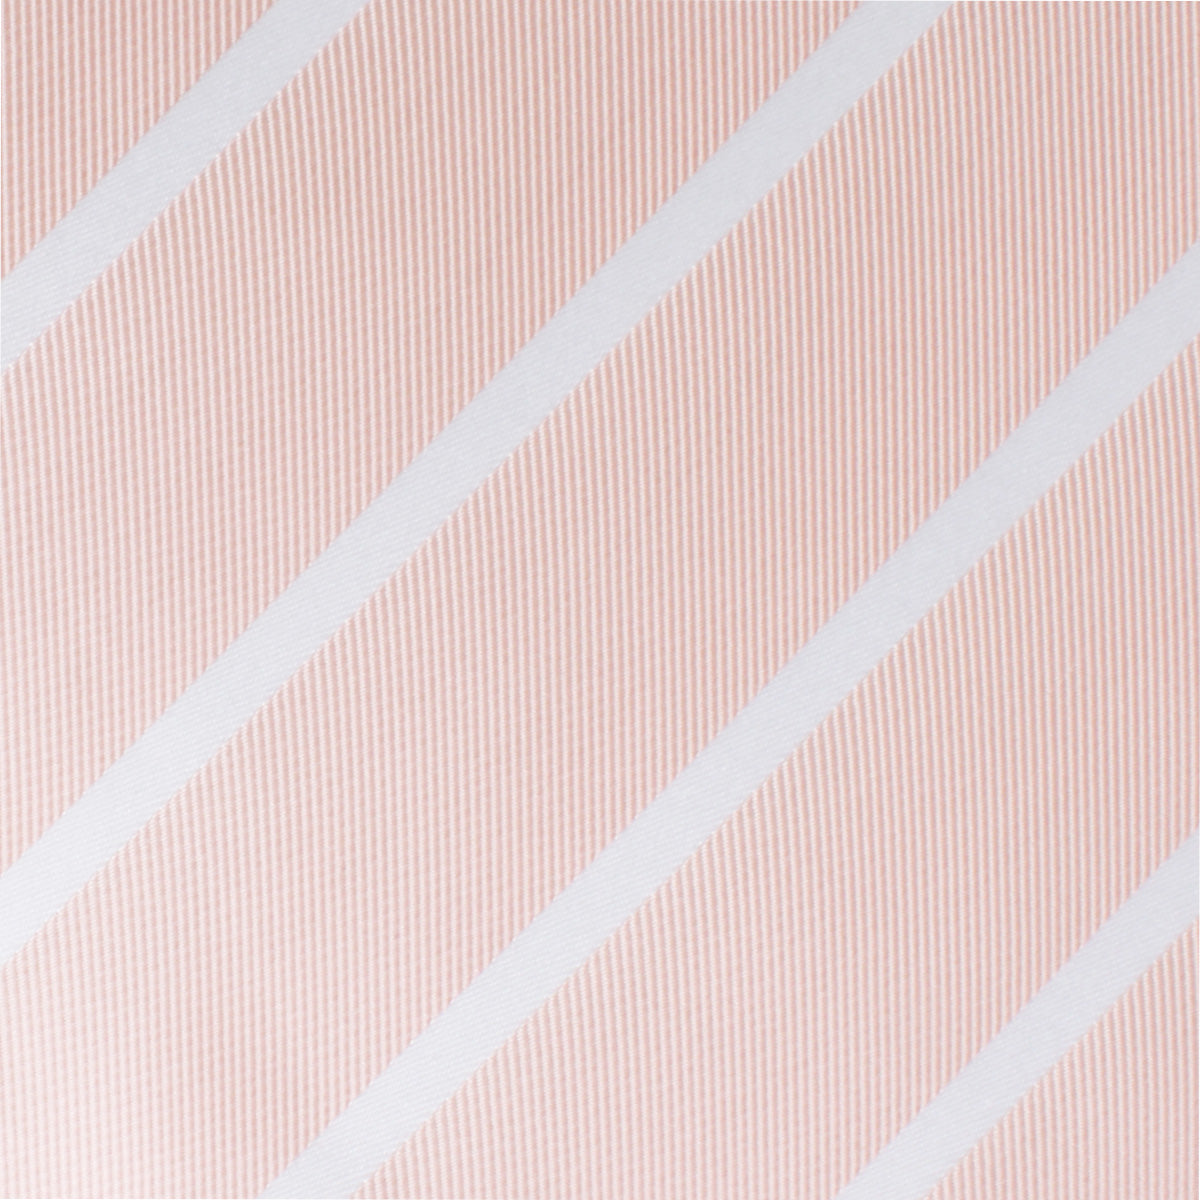 Blush Pink Striped Skinny Tie Fabric